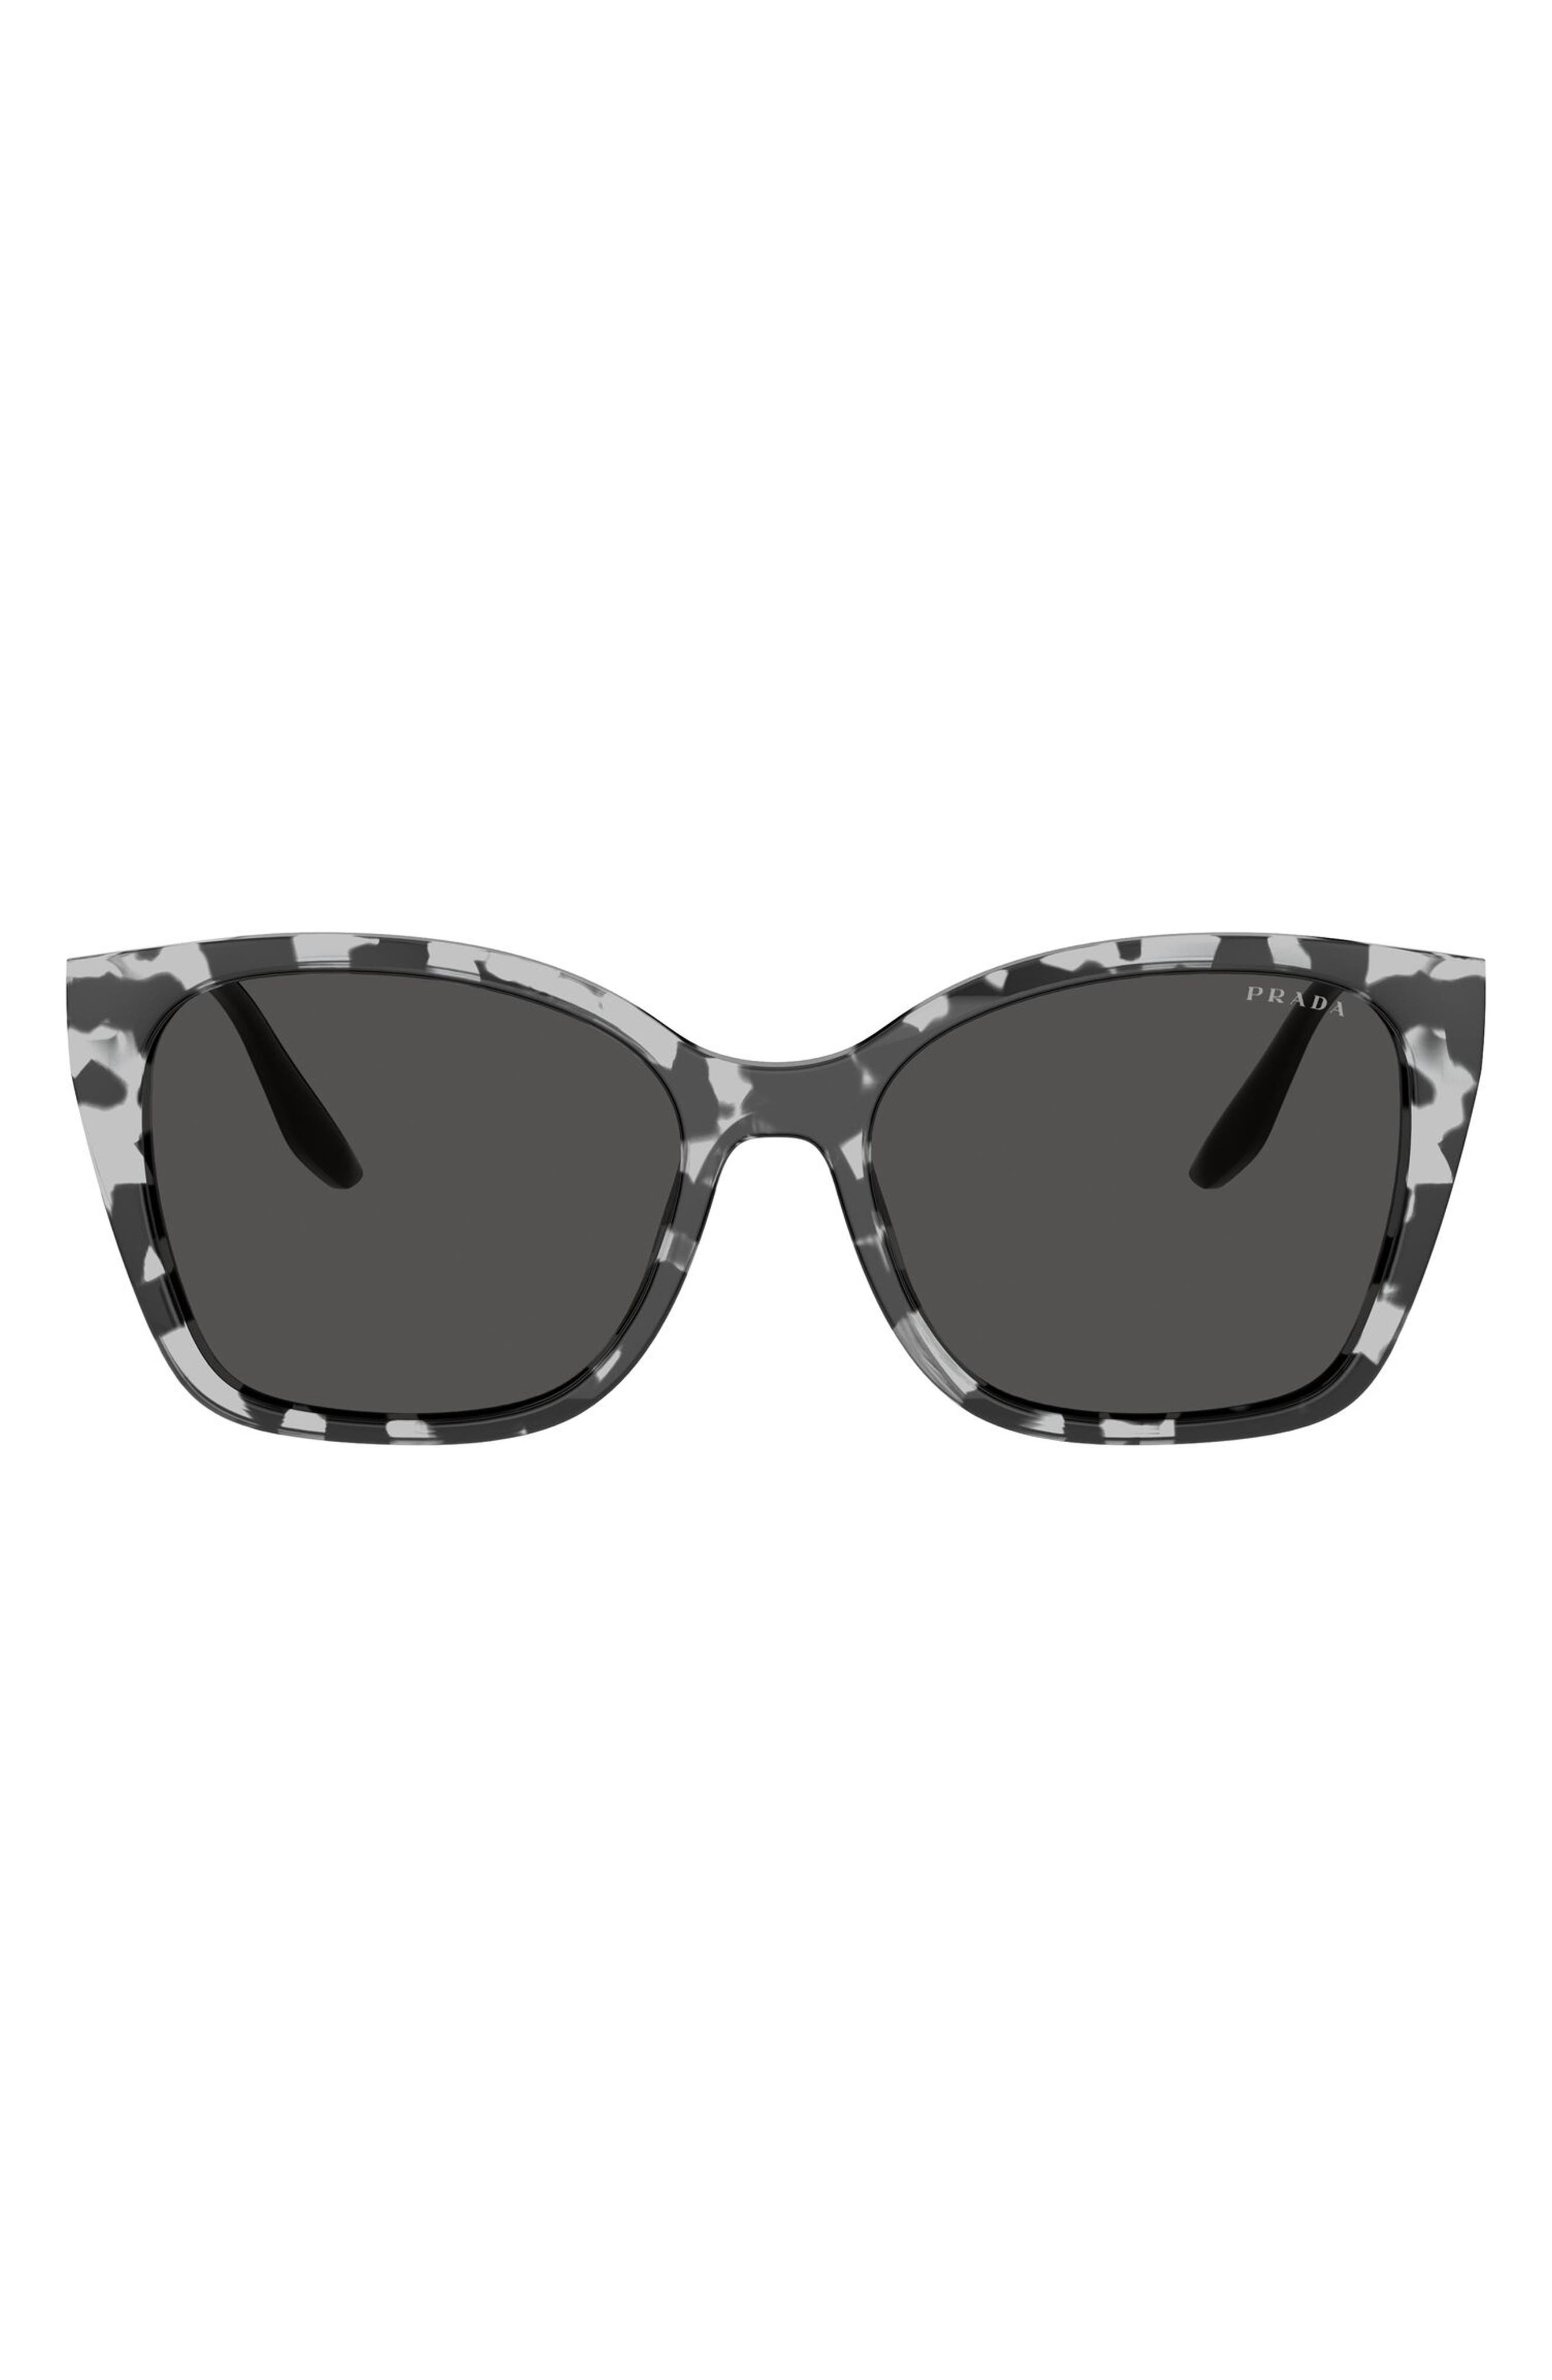 Prada 54mm Gradient Cat Eye Sunglasses in Grey Tortoise/Dark Grey at Nordstrom